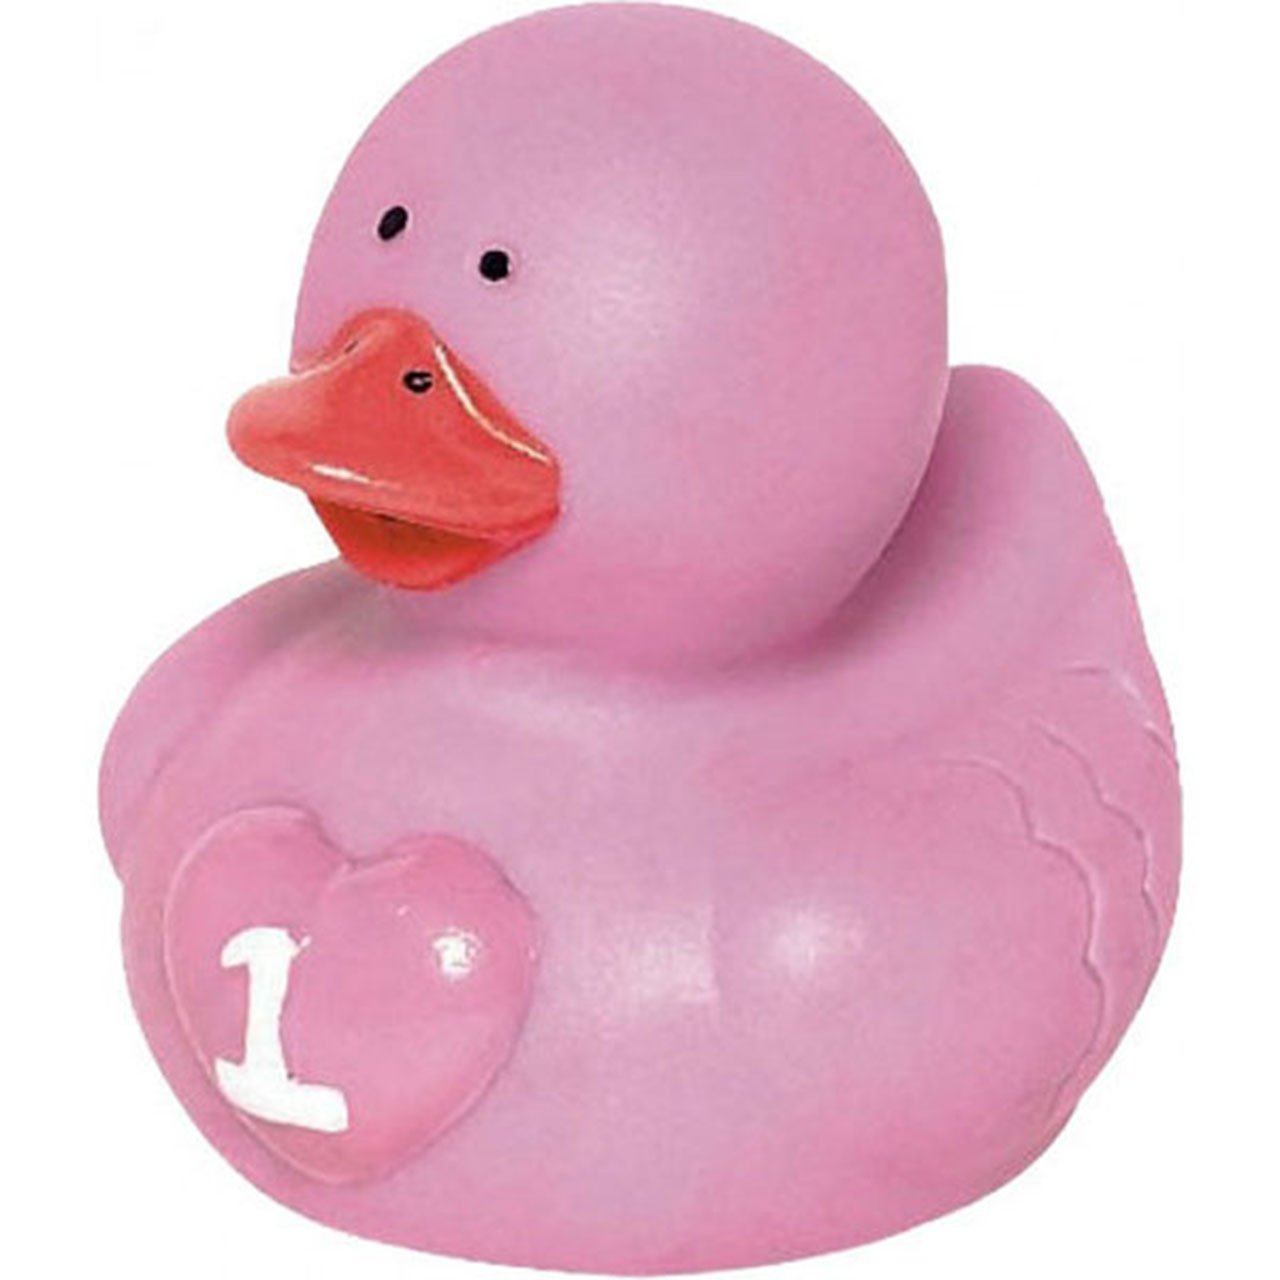 Mini Bath Toy - Pink 1st Birthday Duck